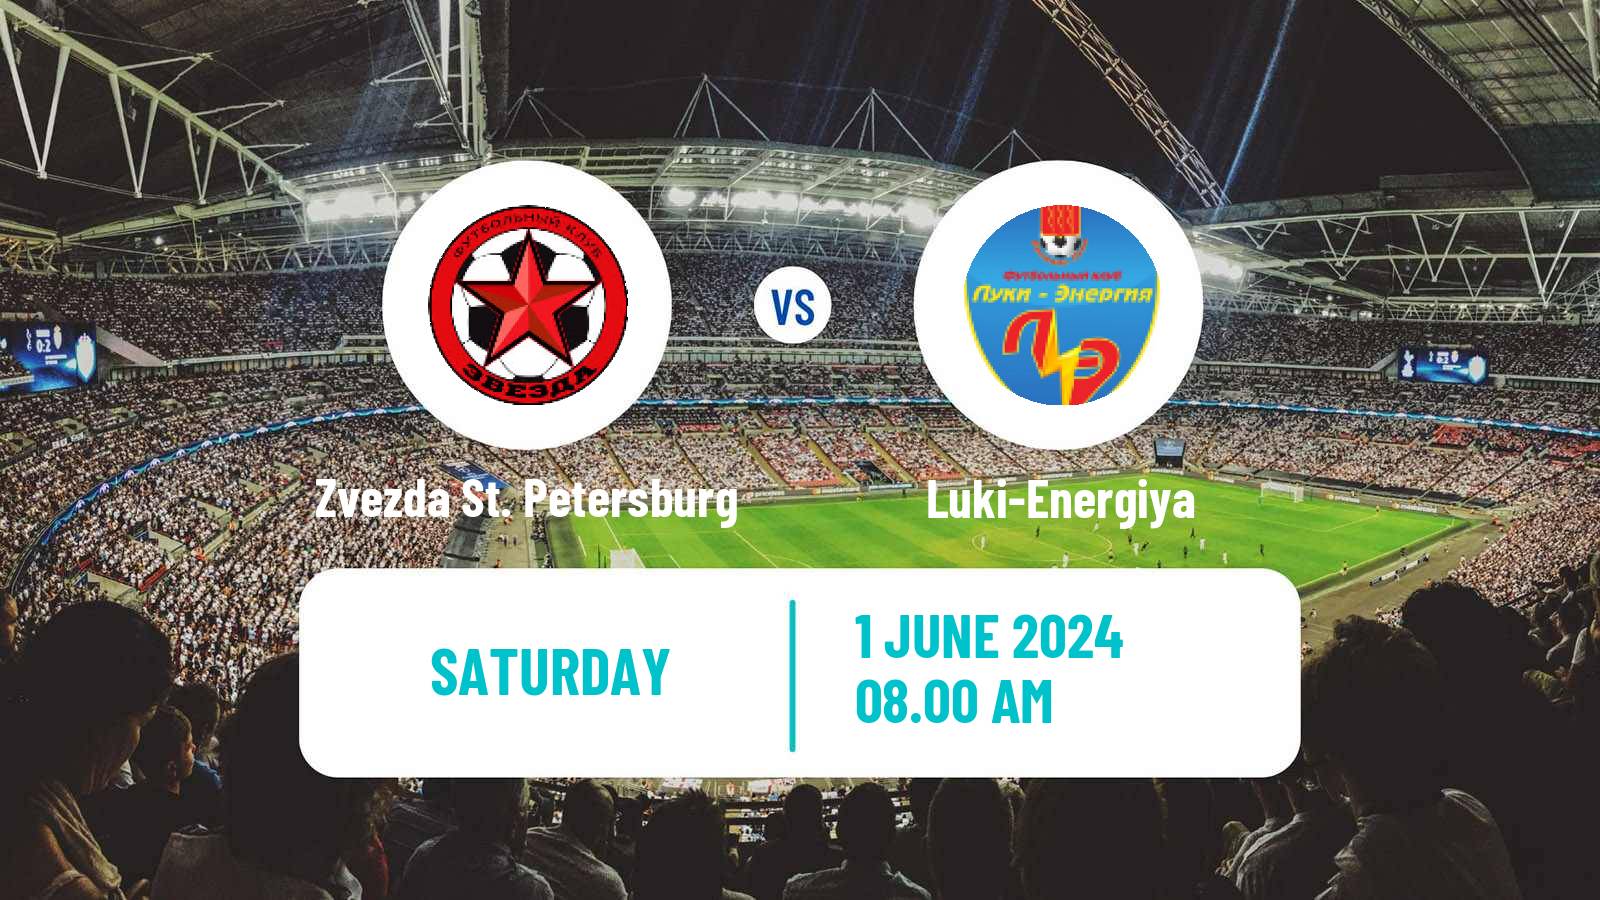 Soccer FNL 2 Division B Group 2 Zvezda St. Petersburg - Luki-Energiya